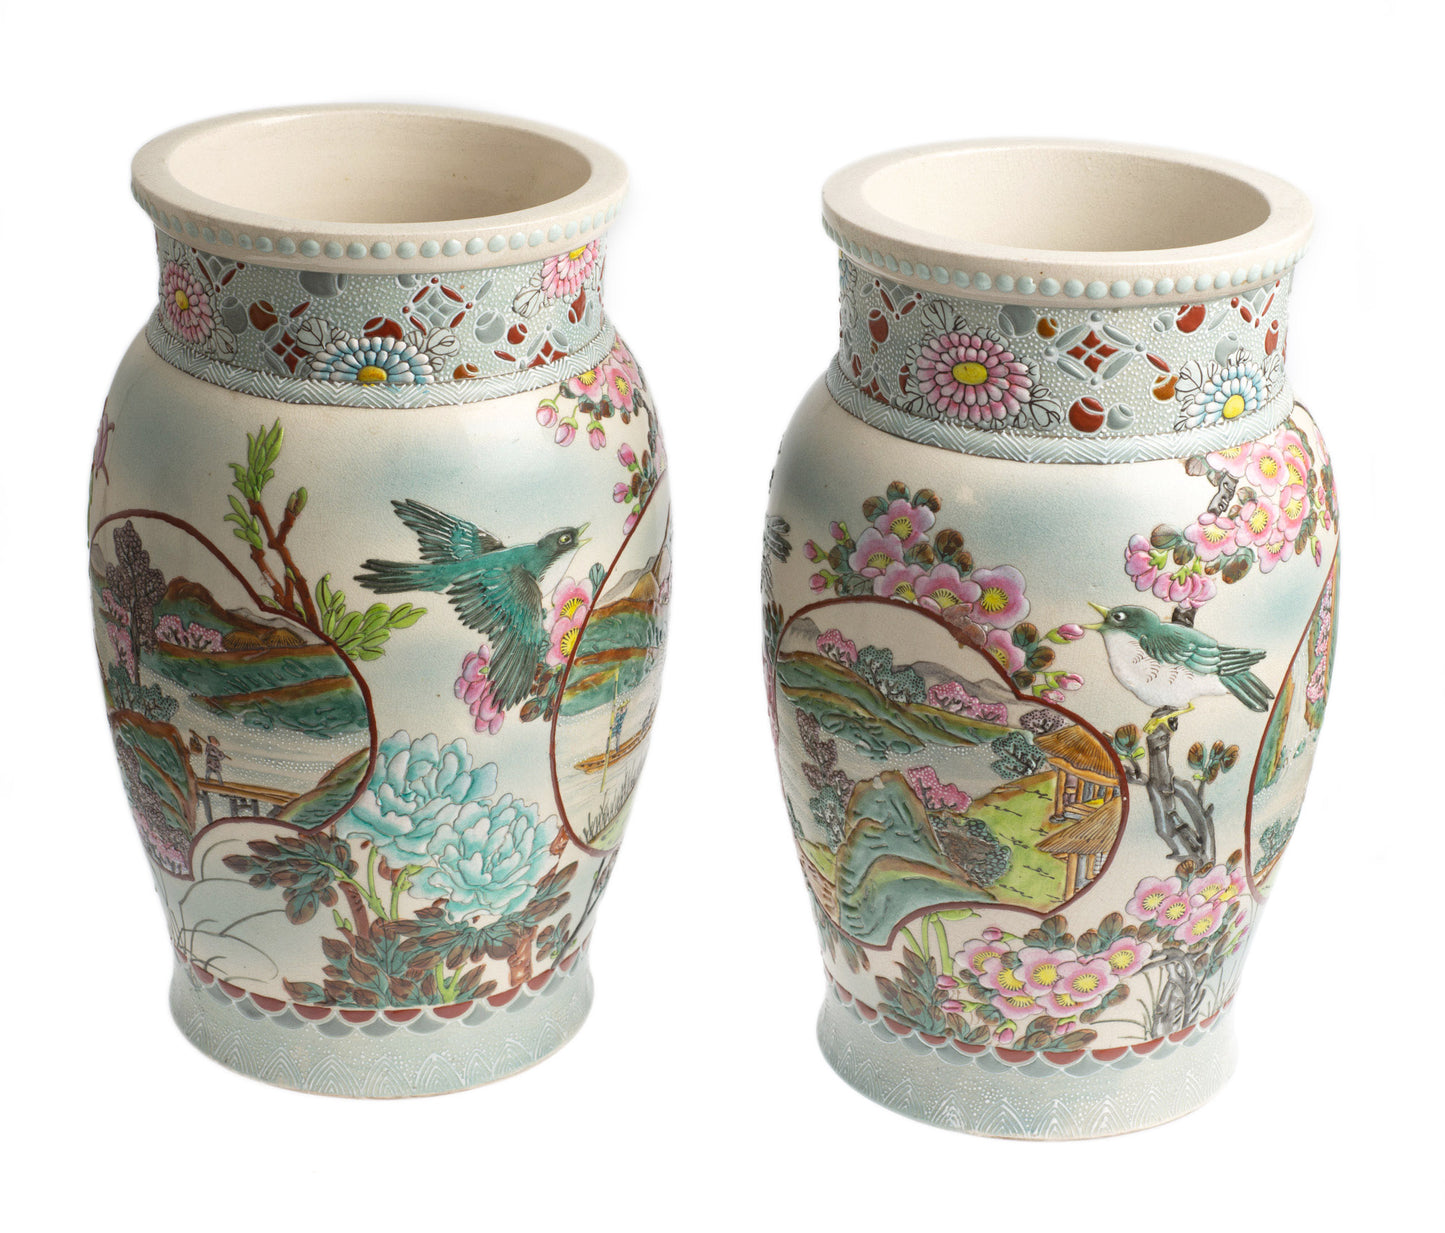 Antique Japanese Satsuma Moriage Vase Pair, Very Large Late Meiji, Prunus Blossom & Birds (Code 2685)